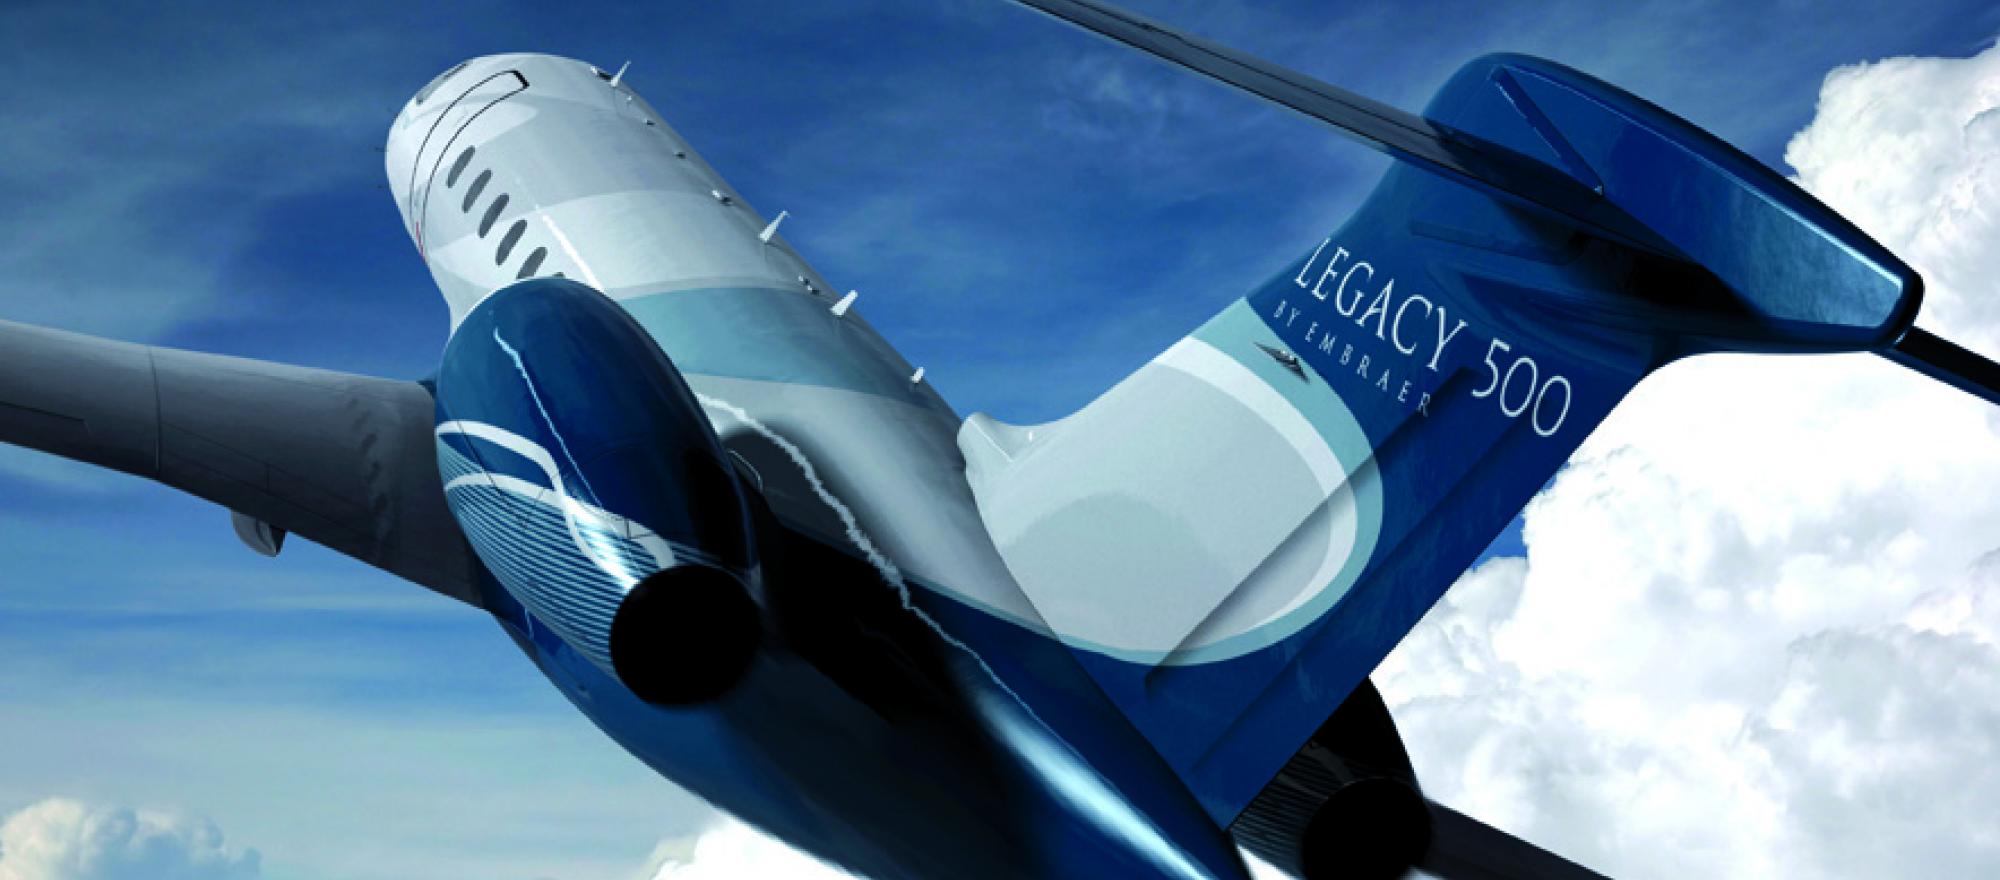 Embraer's Legacy 500